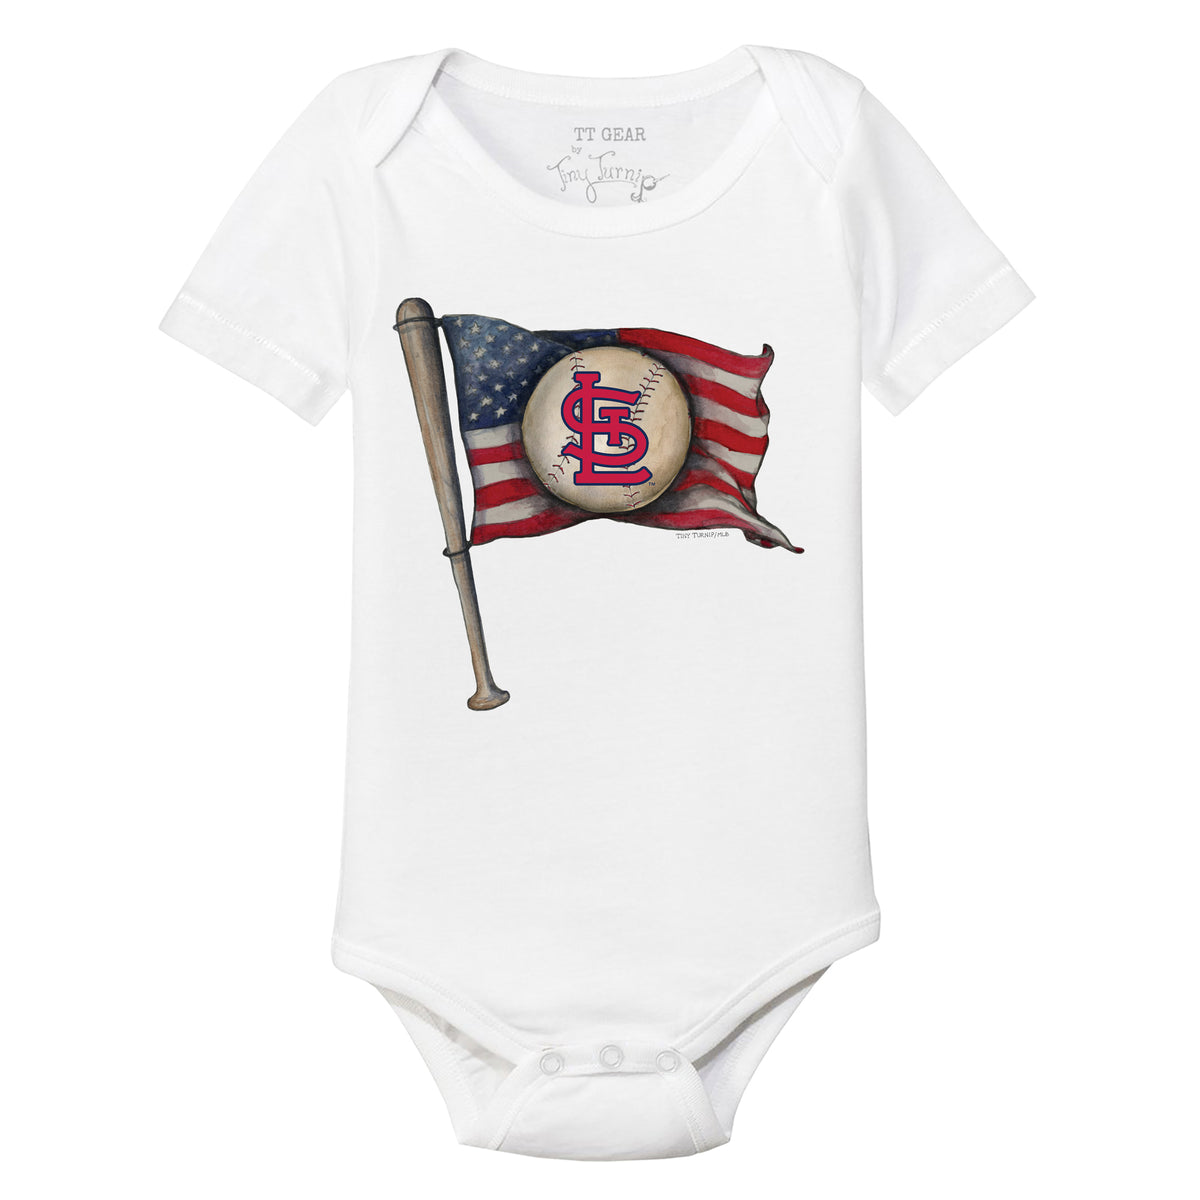 STL Cardinals baby/newborn girl clothes ST. Louis baseball